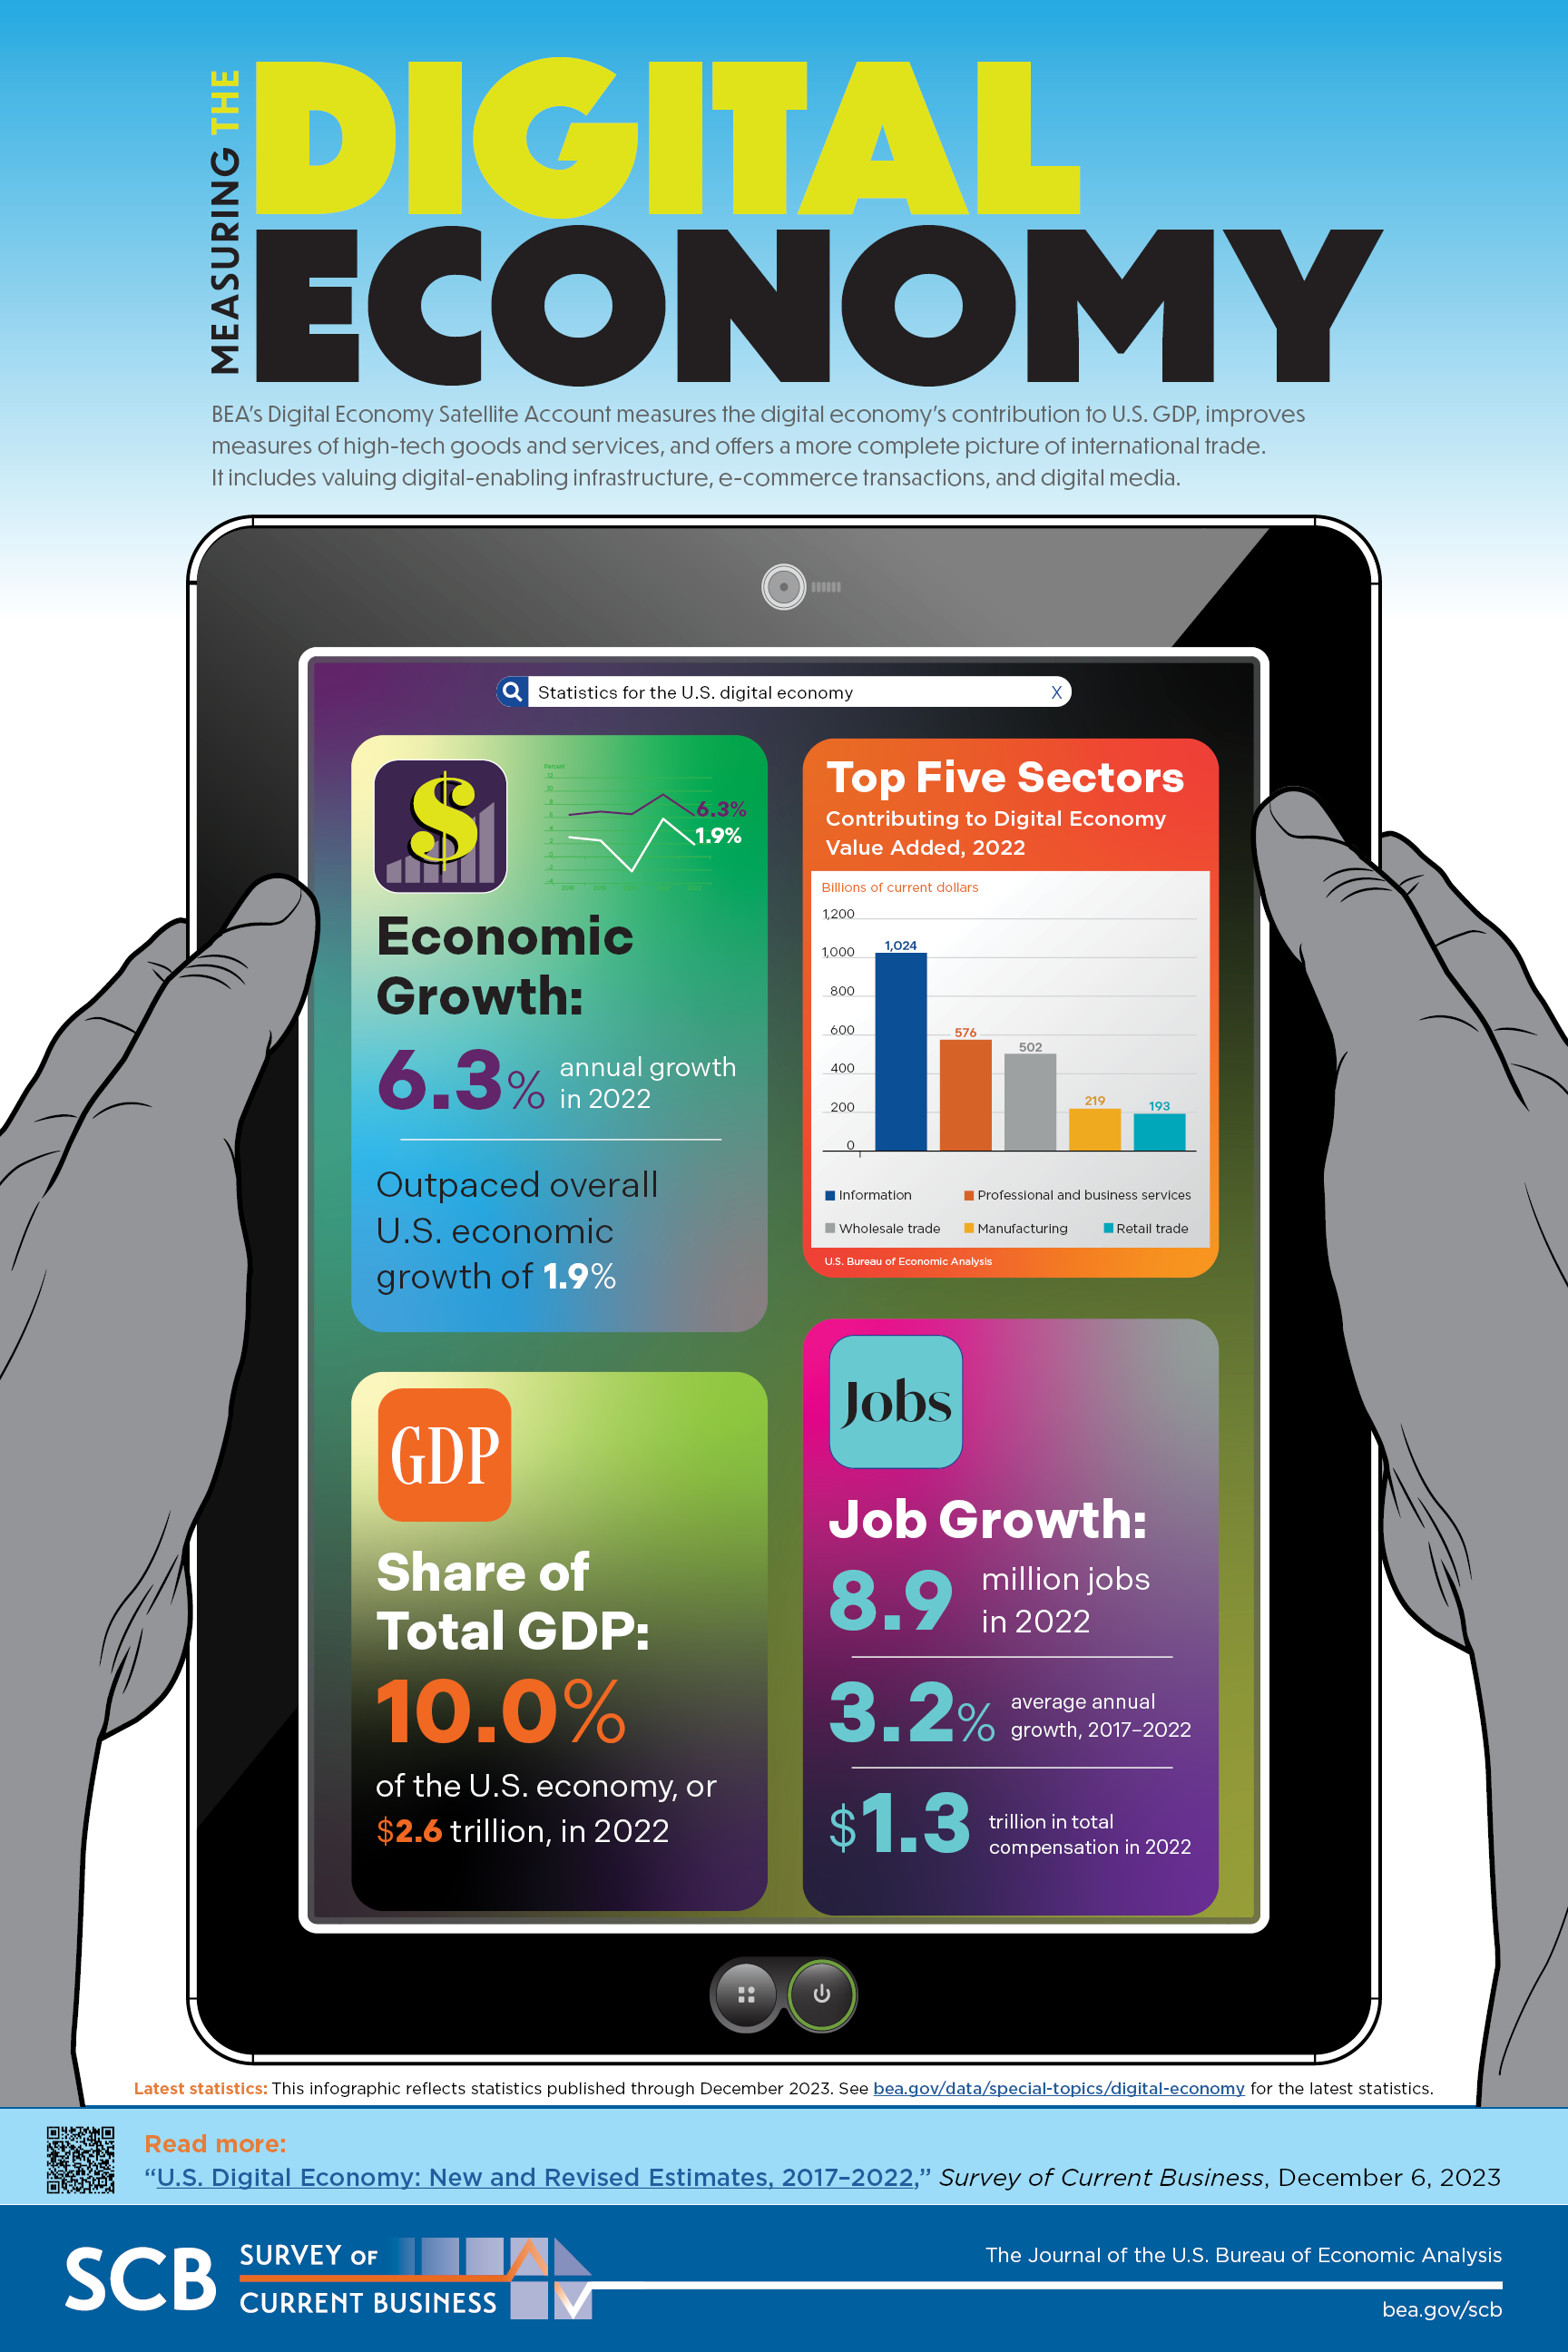 Infographic: Measuring the Digital Economy